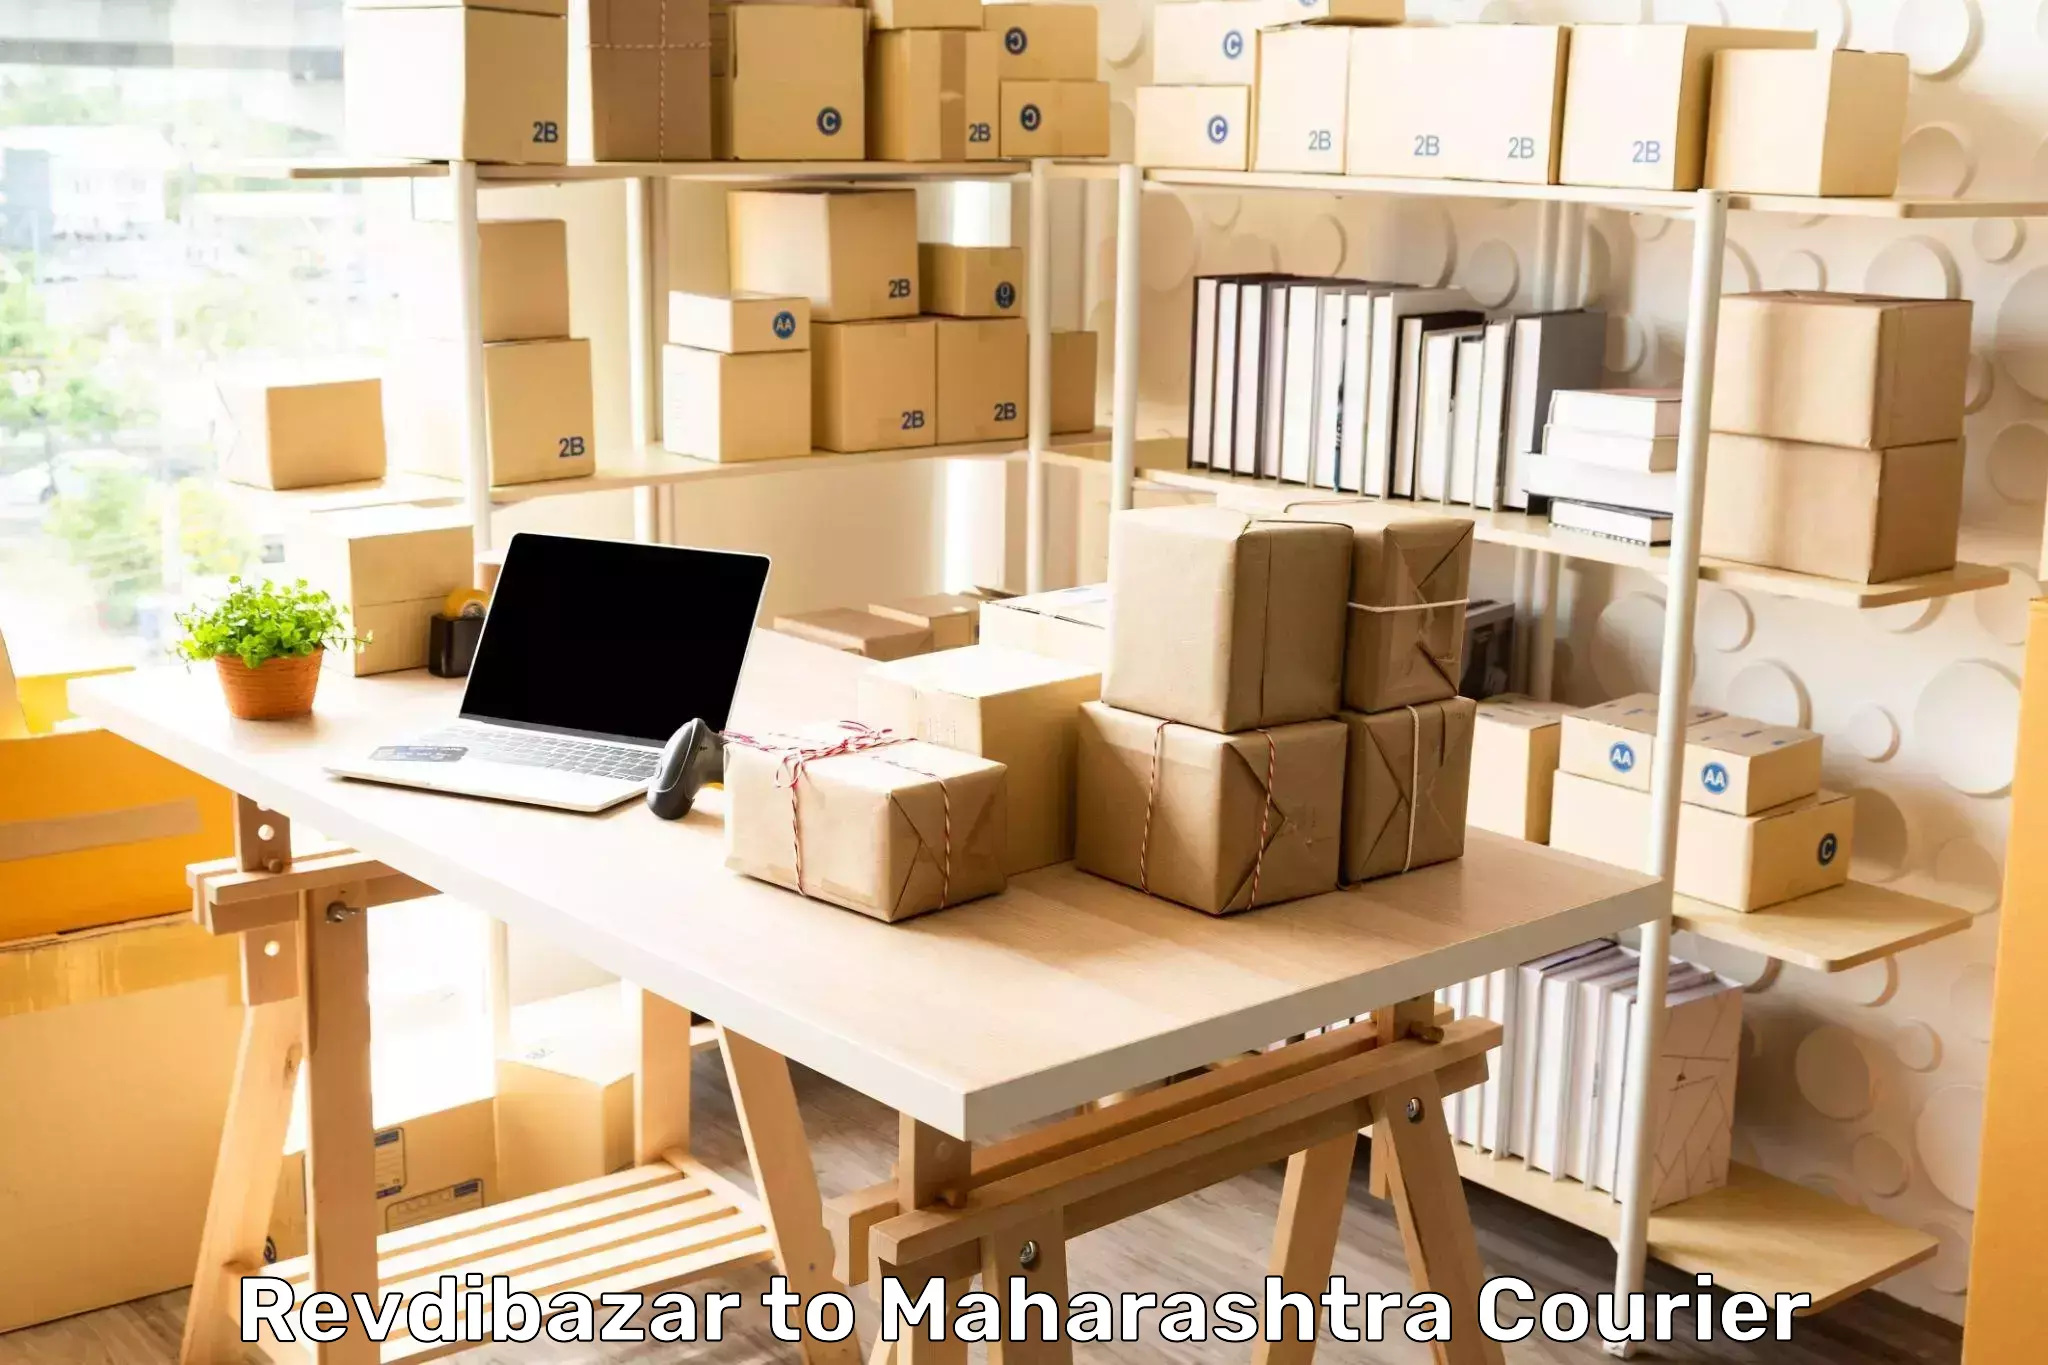 Specialized shipment handling Revdibazar to Maharashtra